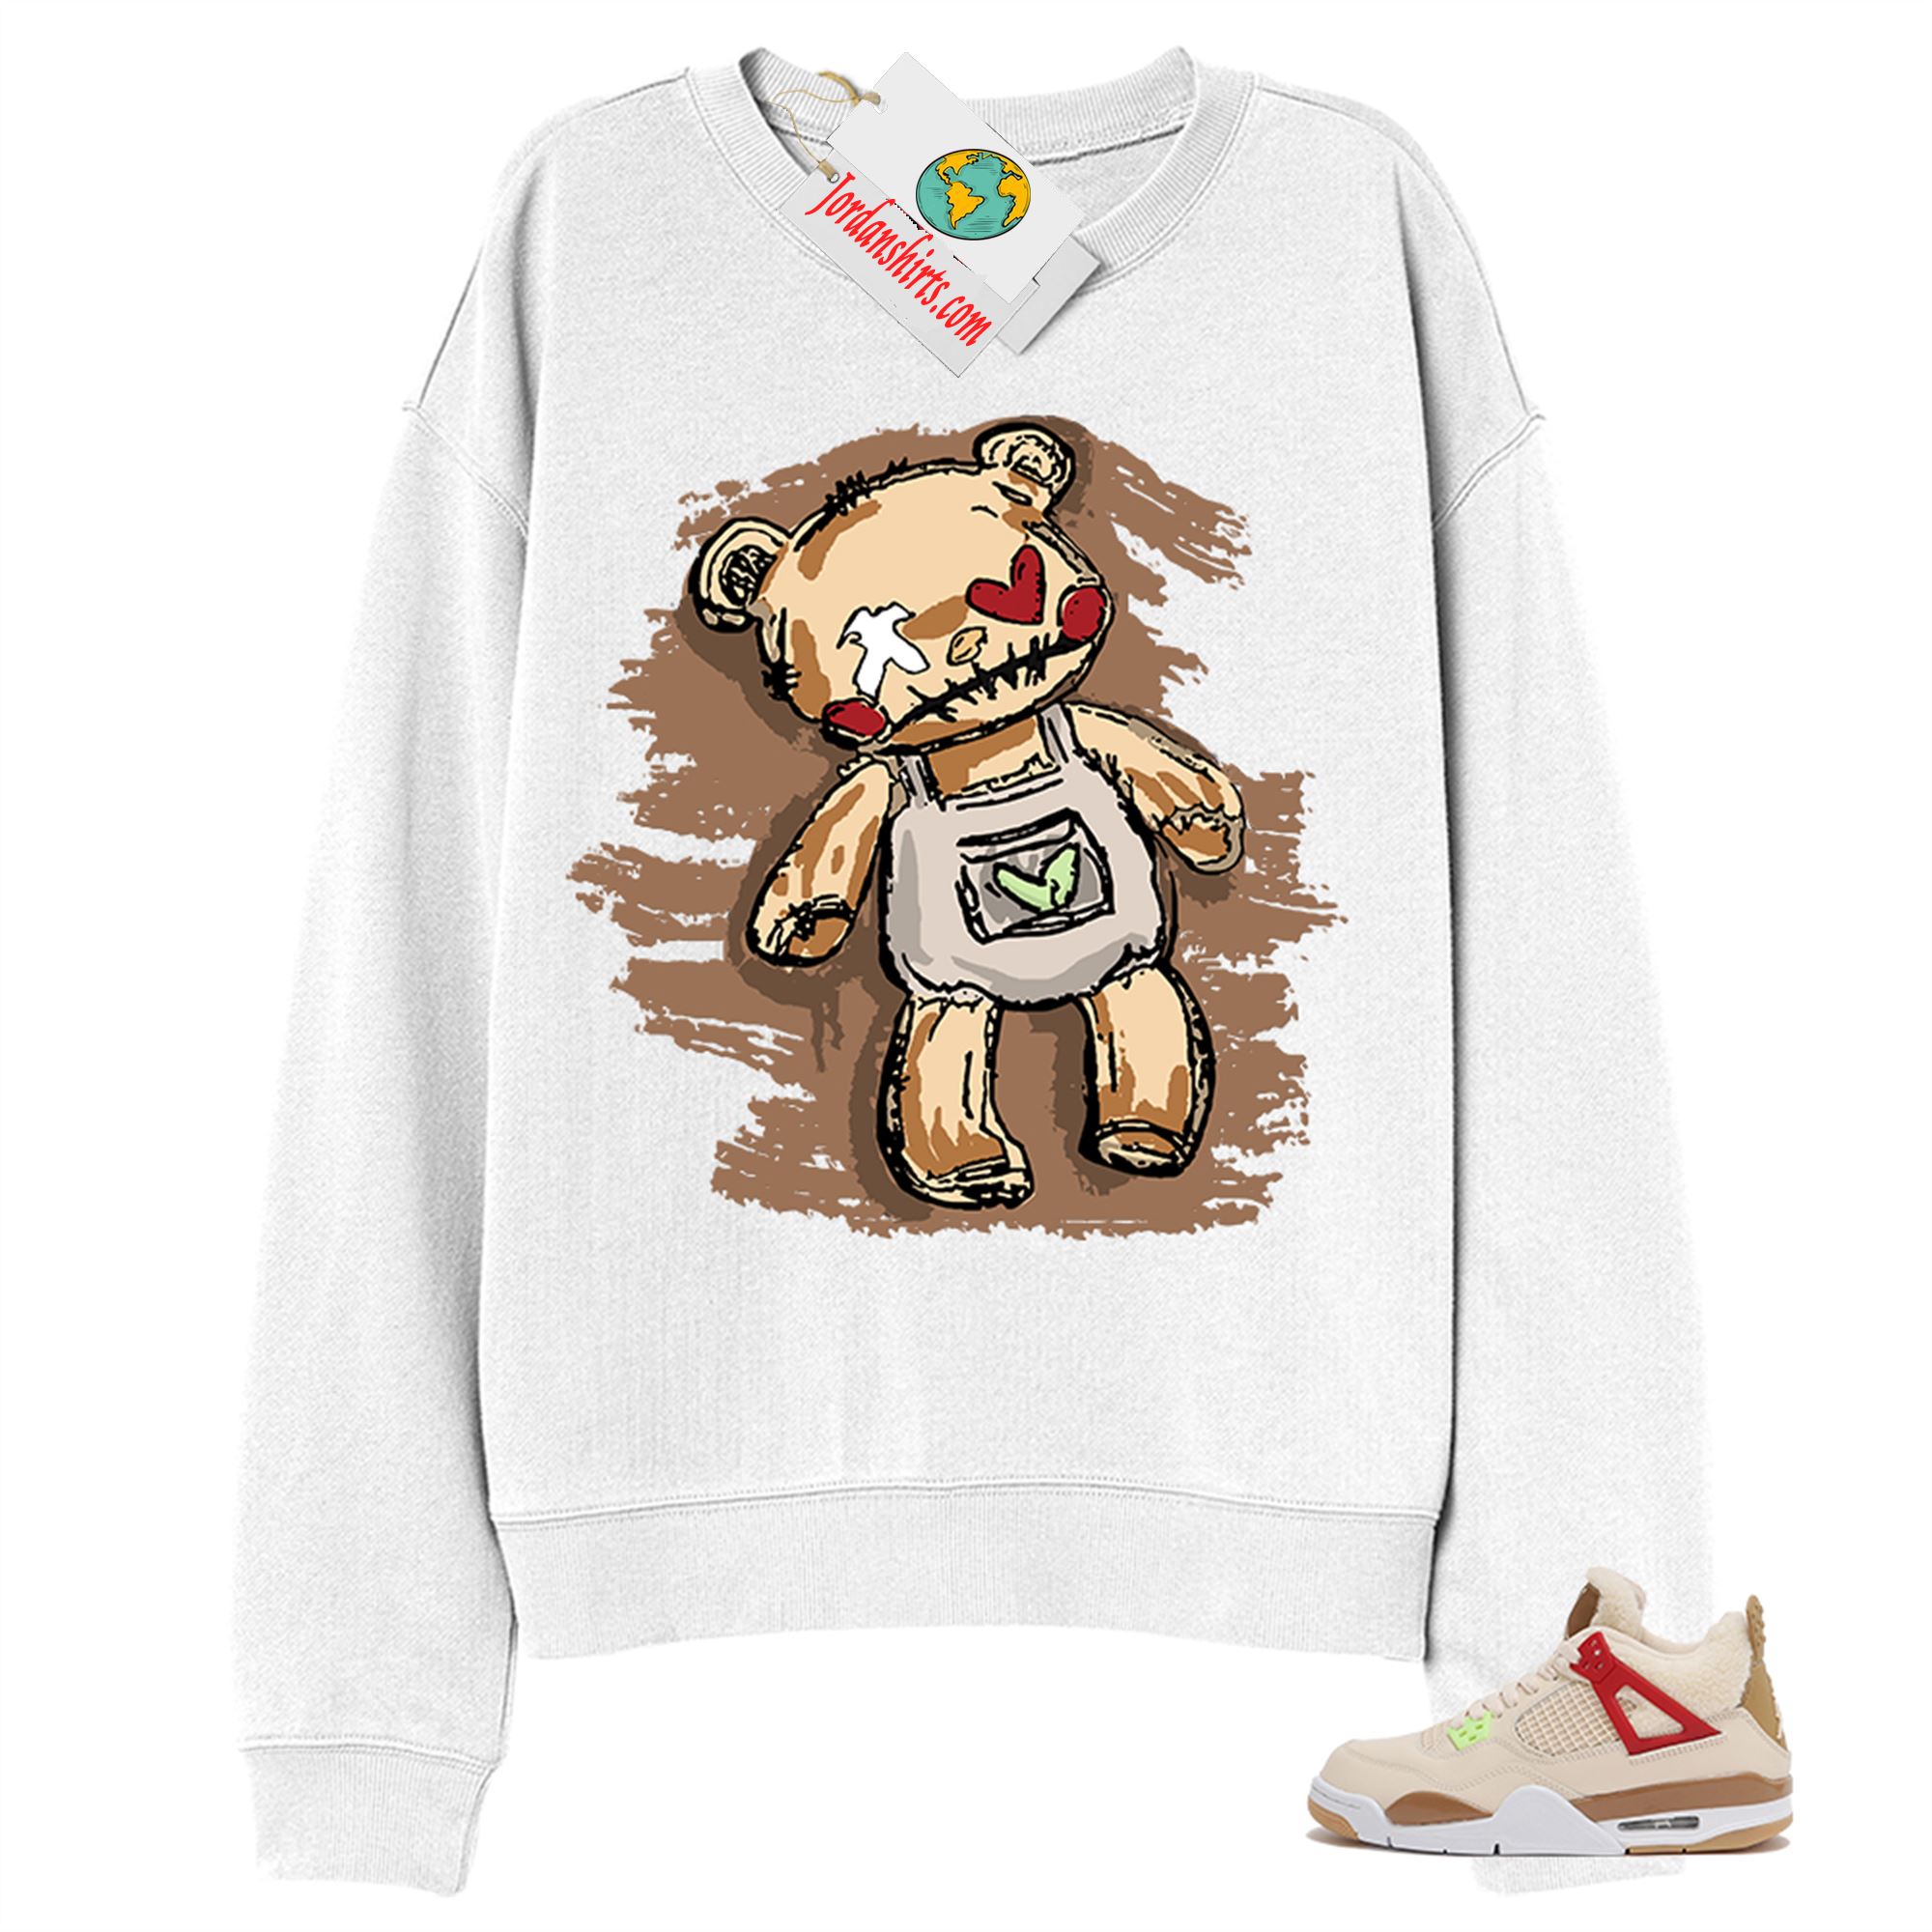 Jordan 4 Sweatshirt, Teddy Bear Broken Heart White Sweatshirt Air Jordan 4 Wild Things 4s Size Up To 5xl